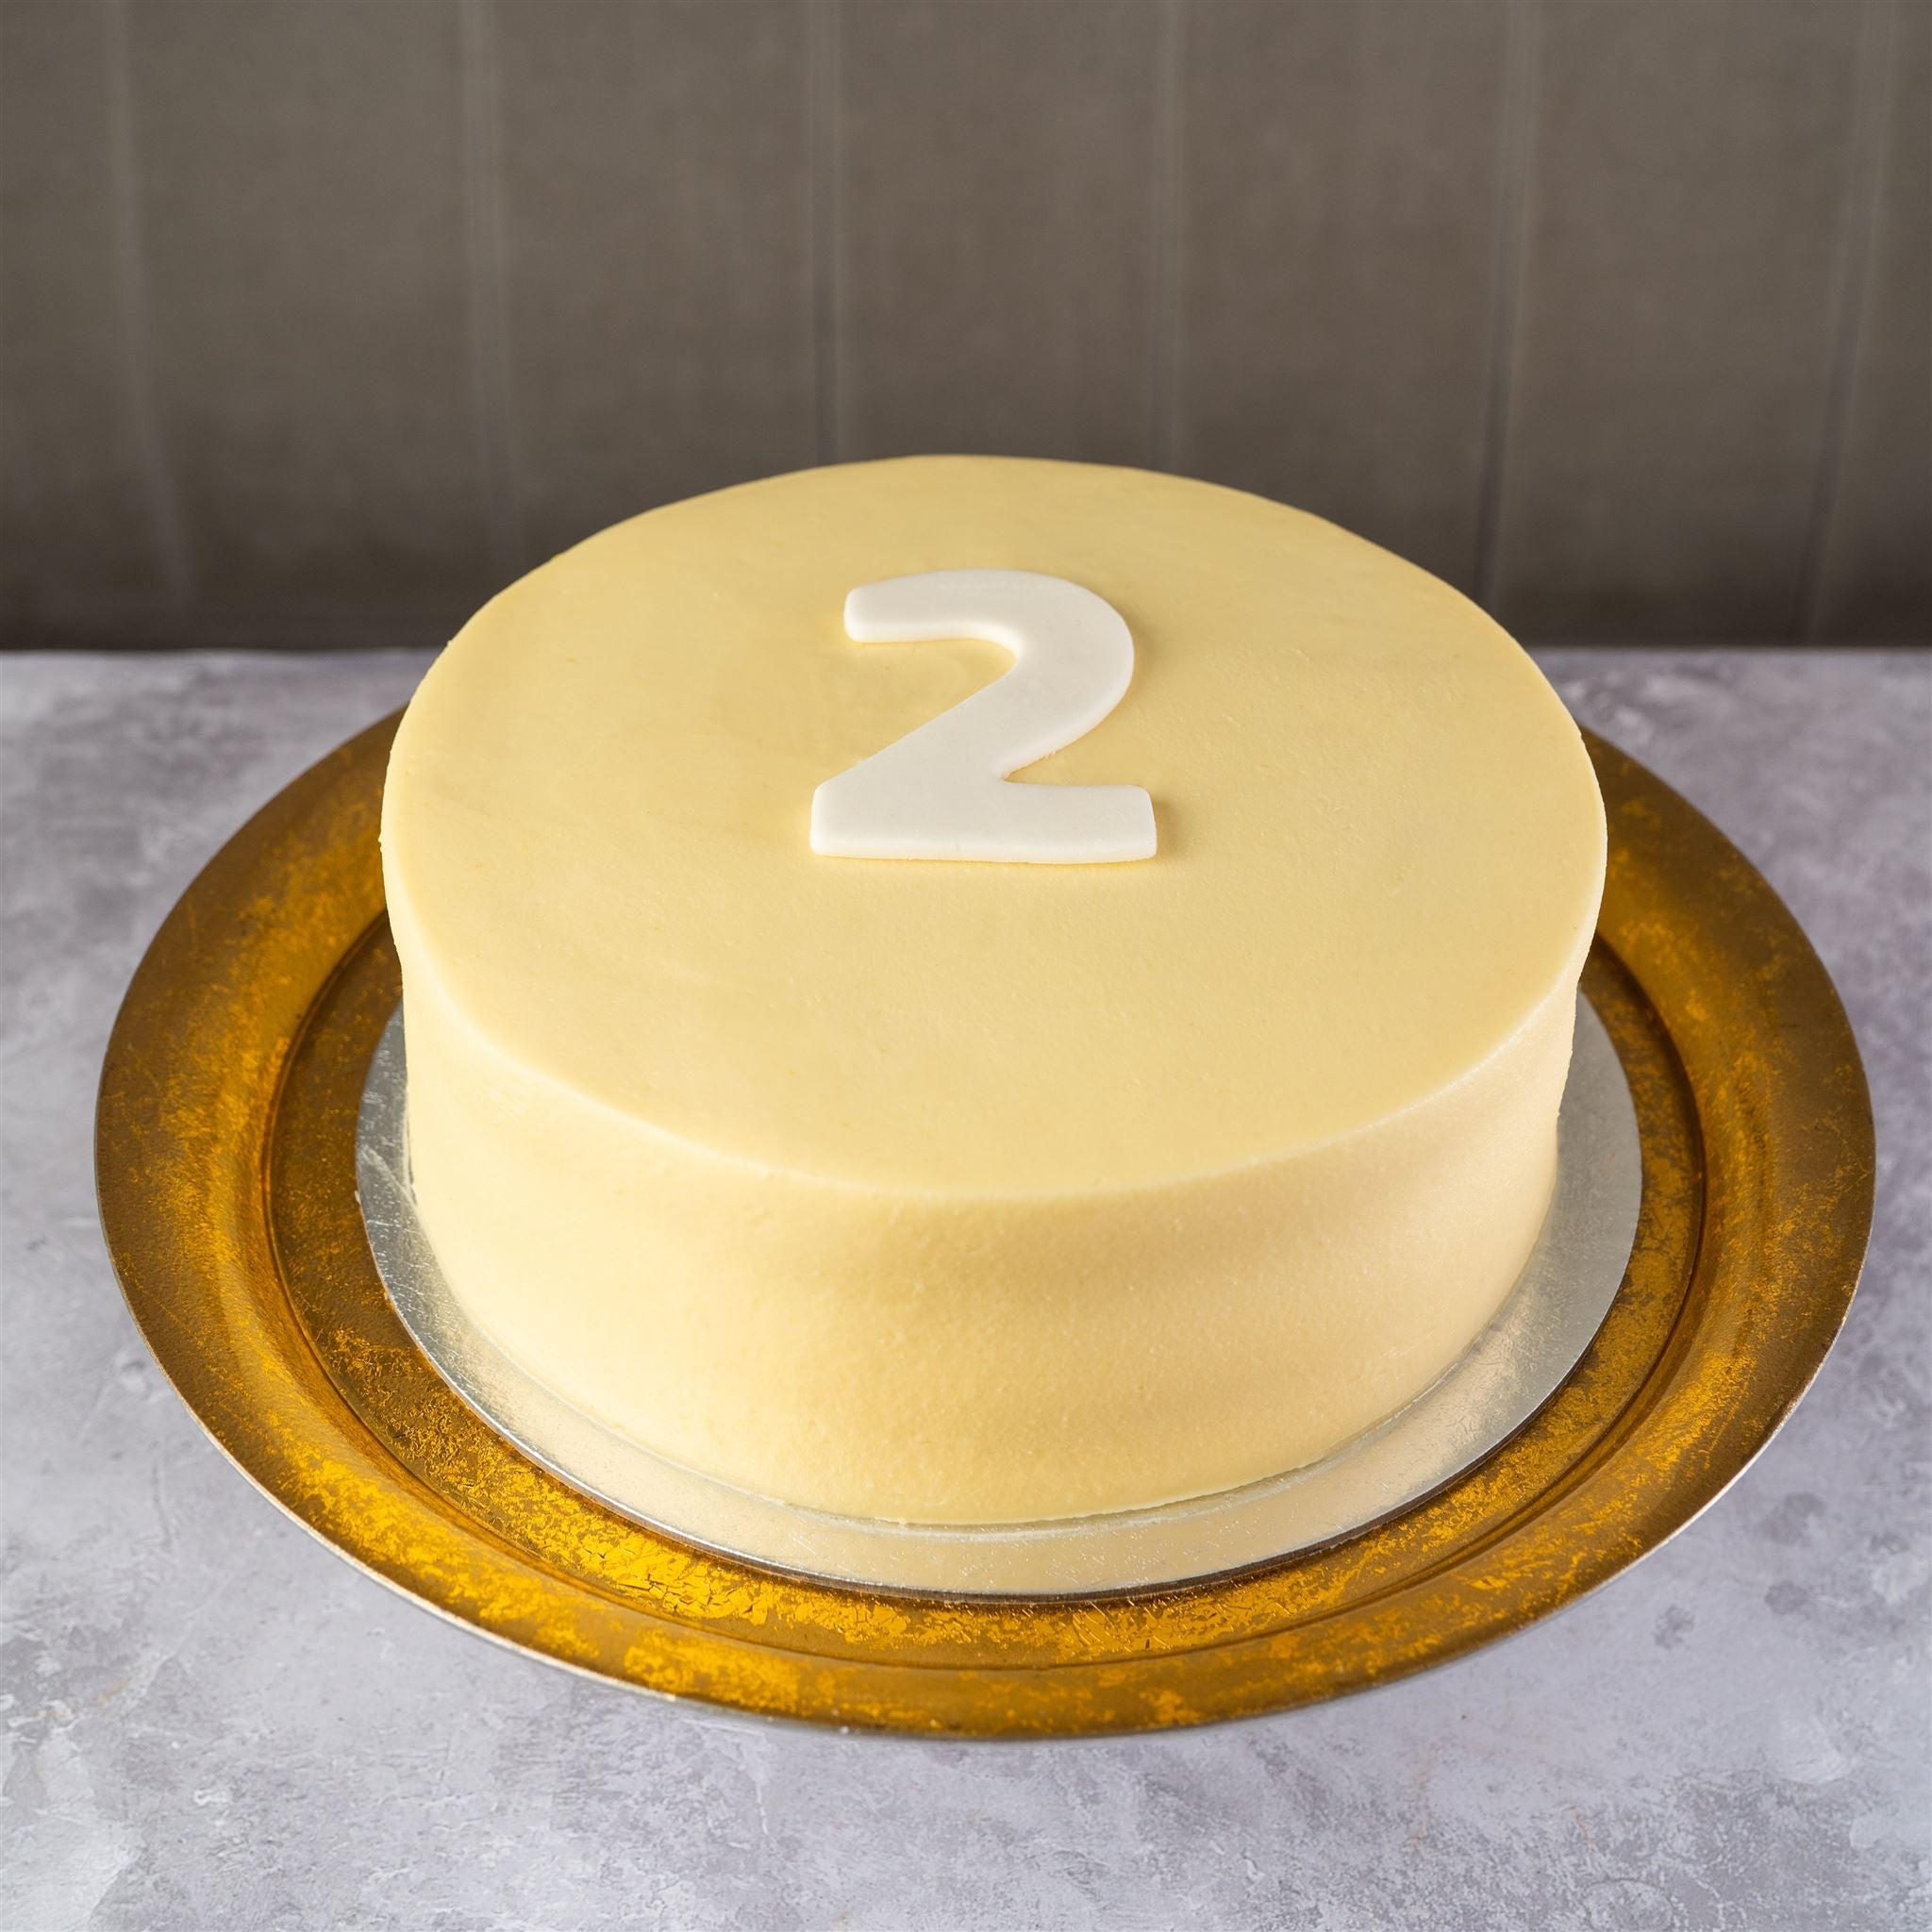 Number 2 Birthday Cake - Jack and Beyond